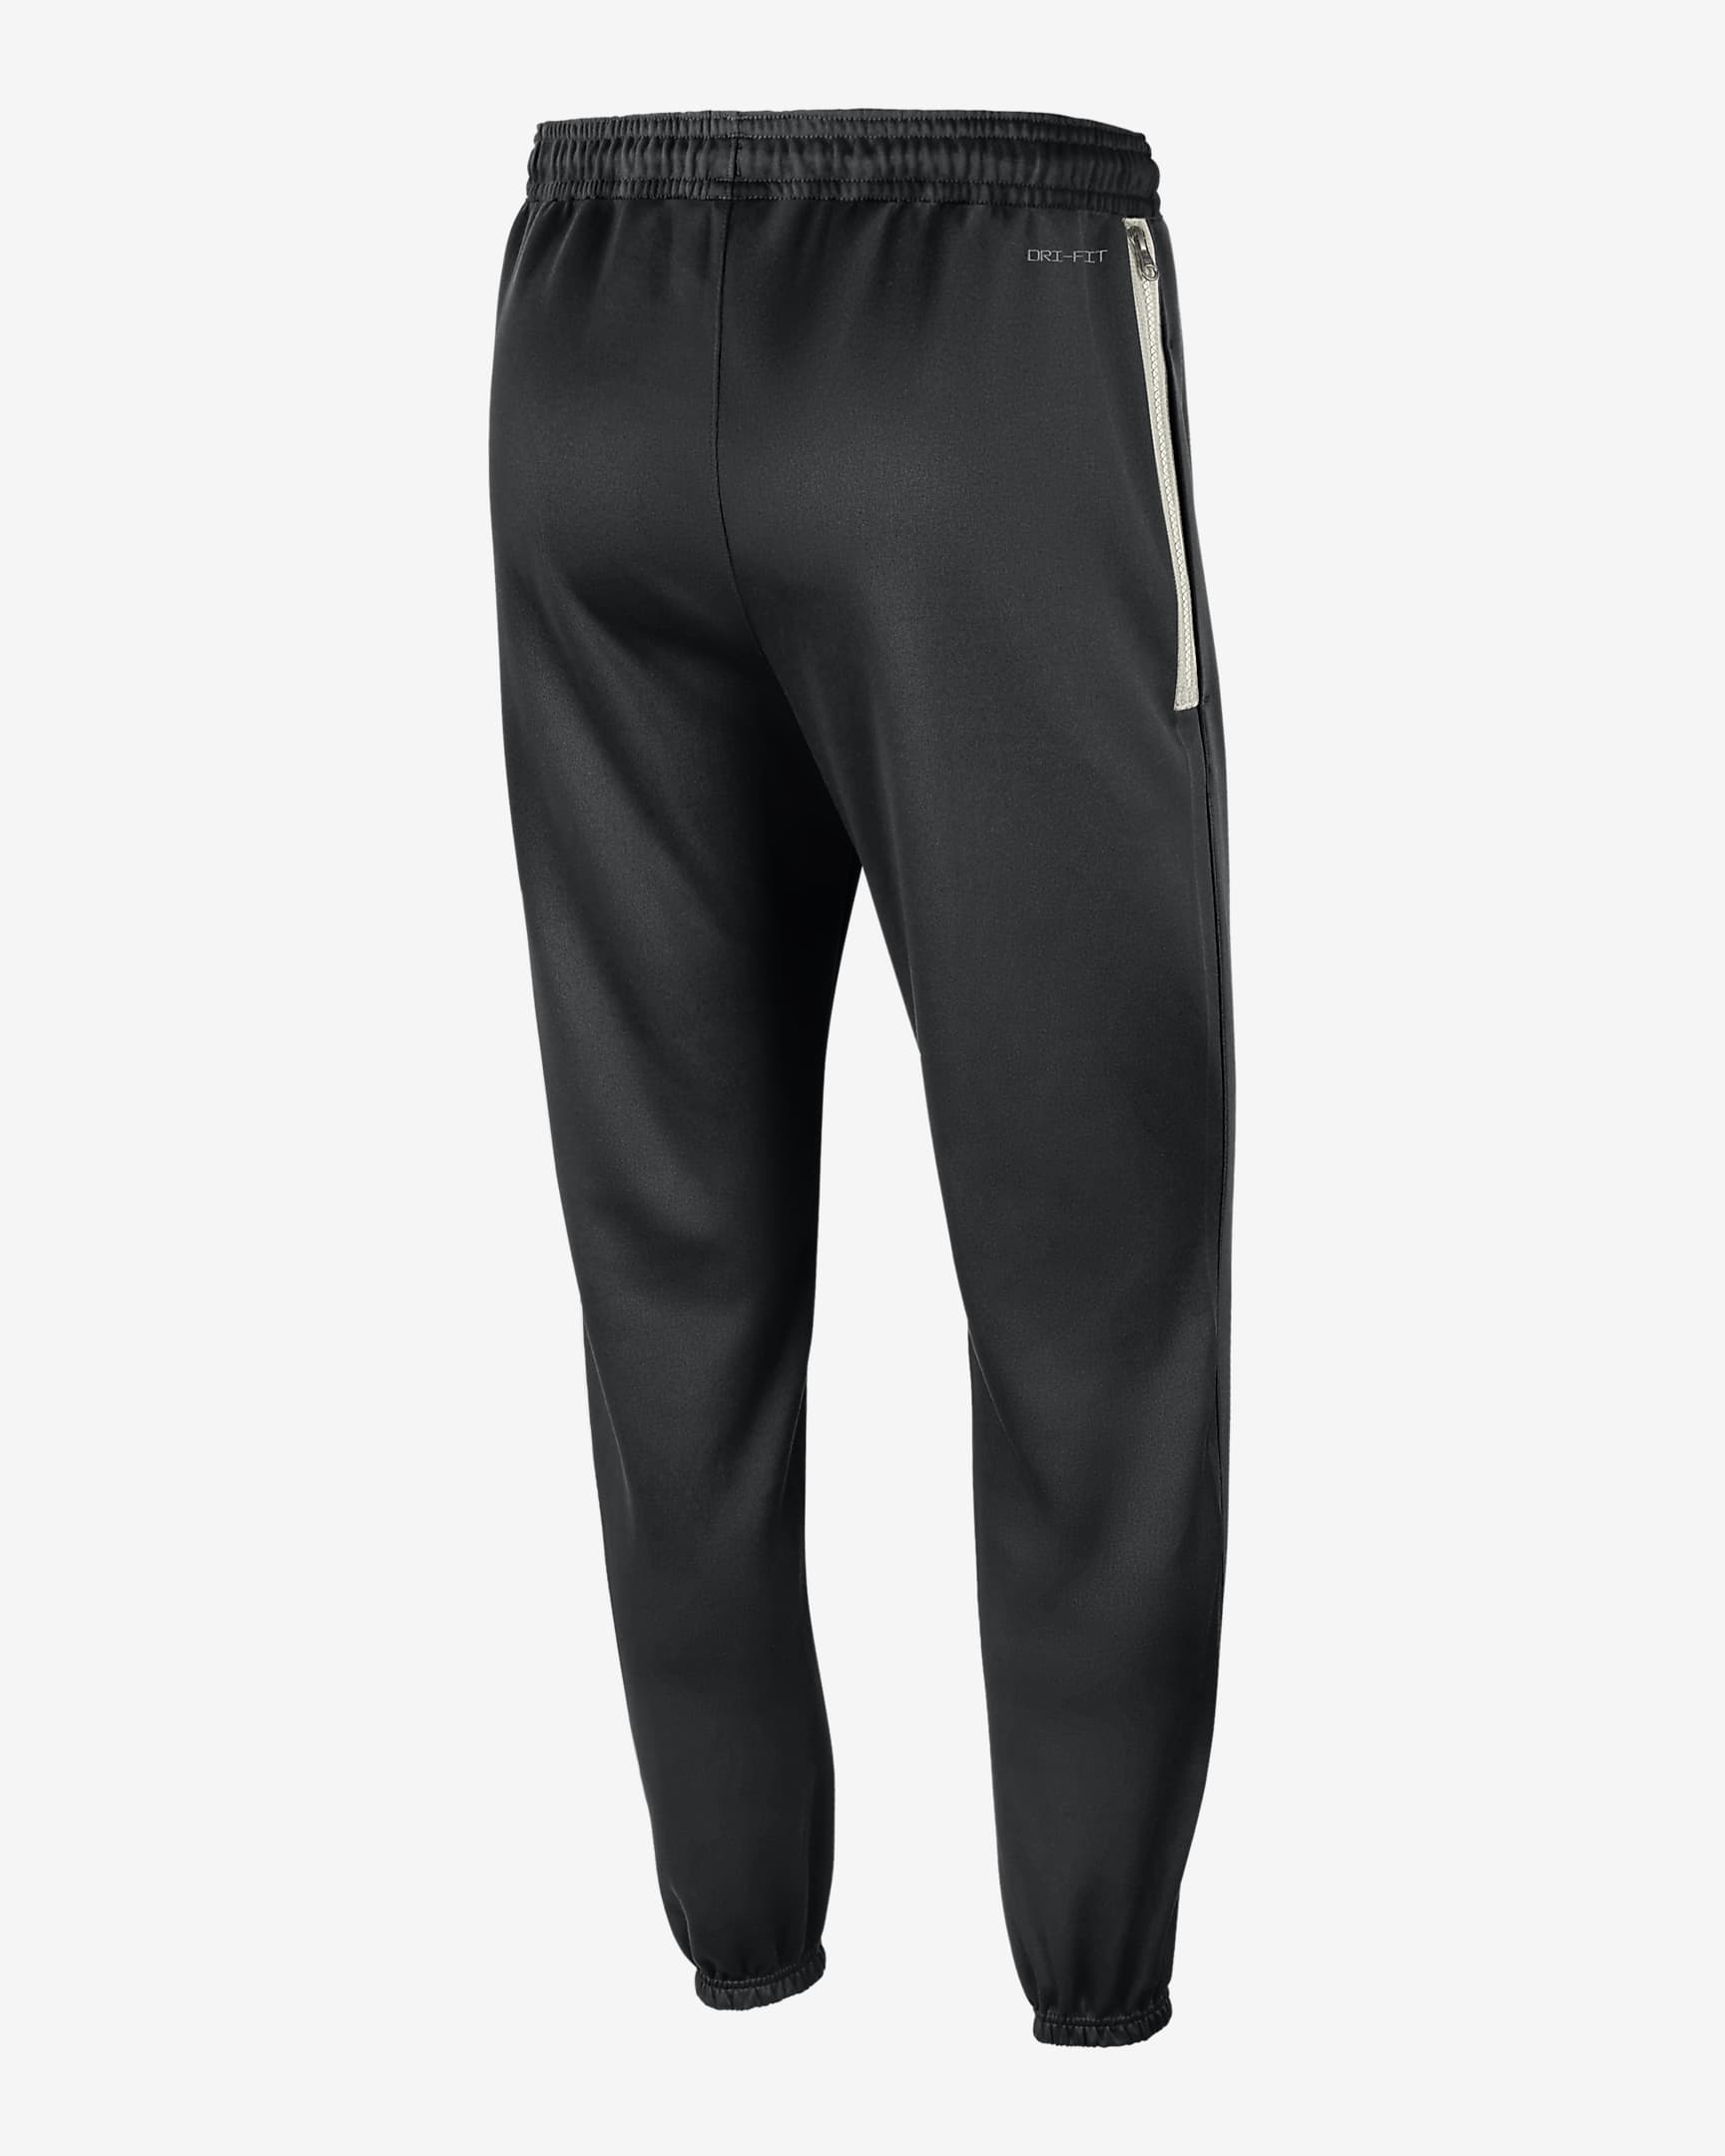 Team 31 Standard Issue Men's Nike Dri-FIT NBA Trousers - Black/Pale Ivory/Light Iron Ore